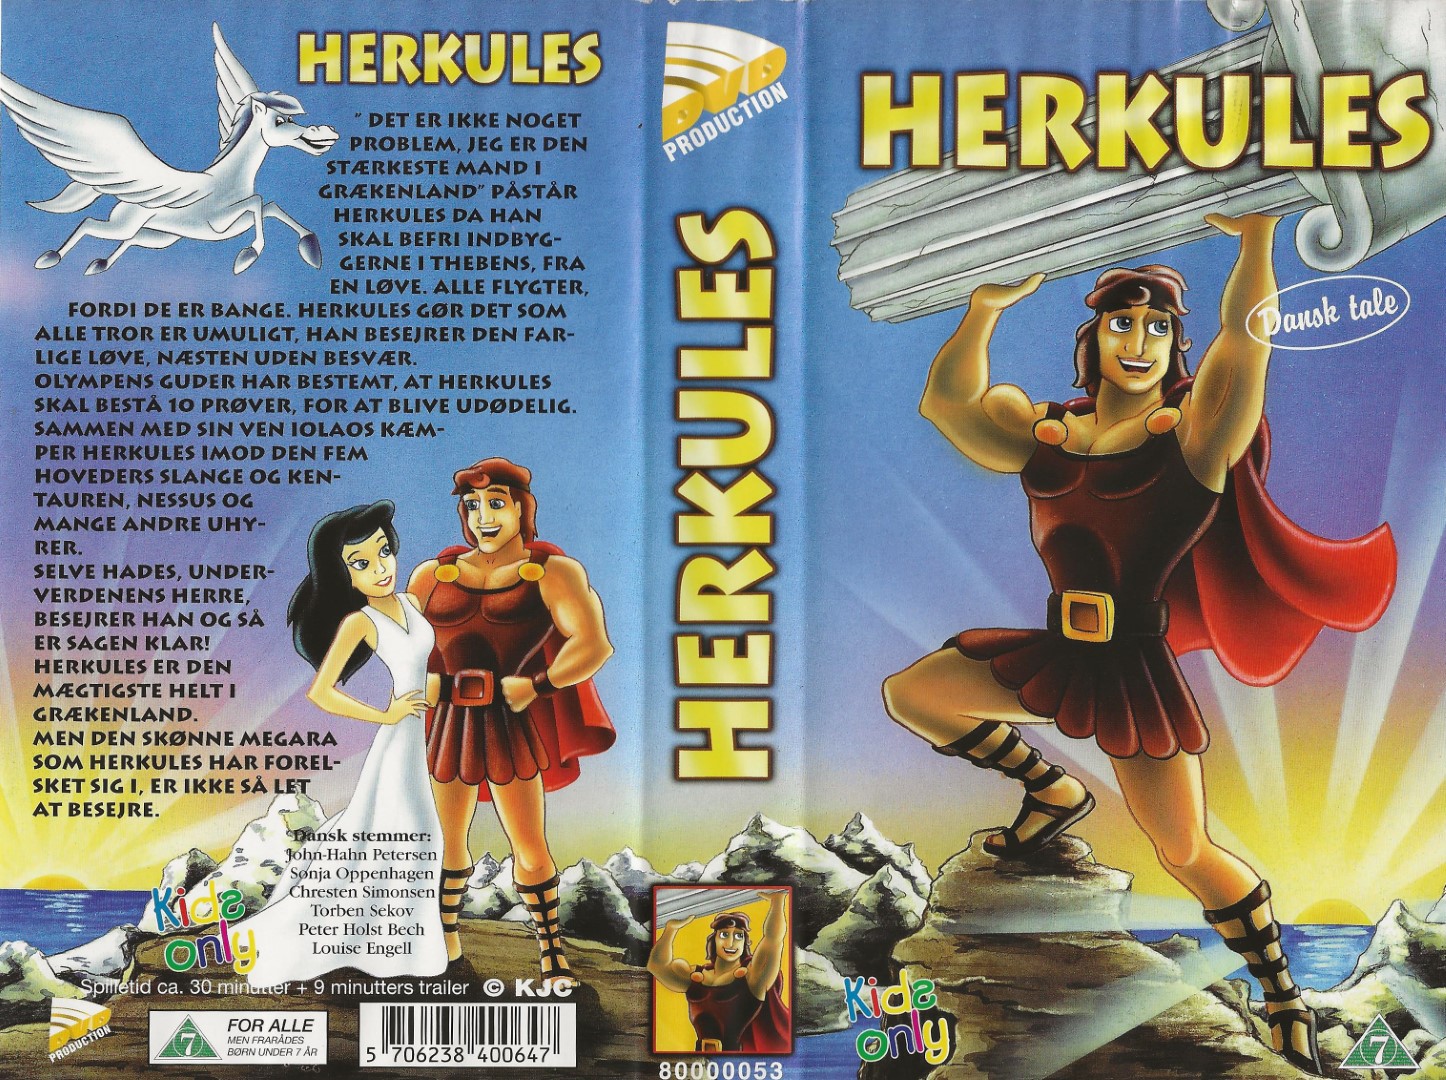 Herkules  VHS DVD - Dansk Video Distribution A/S 0